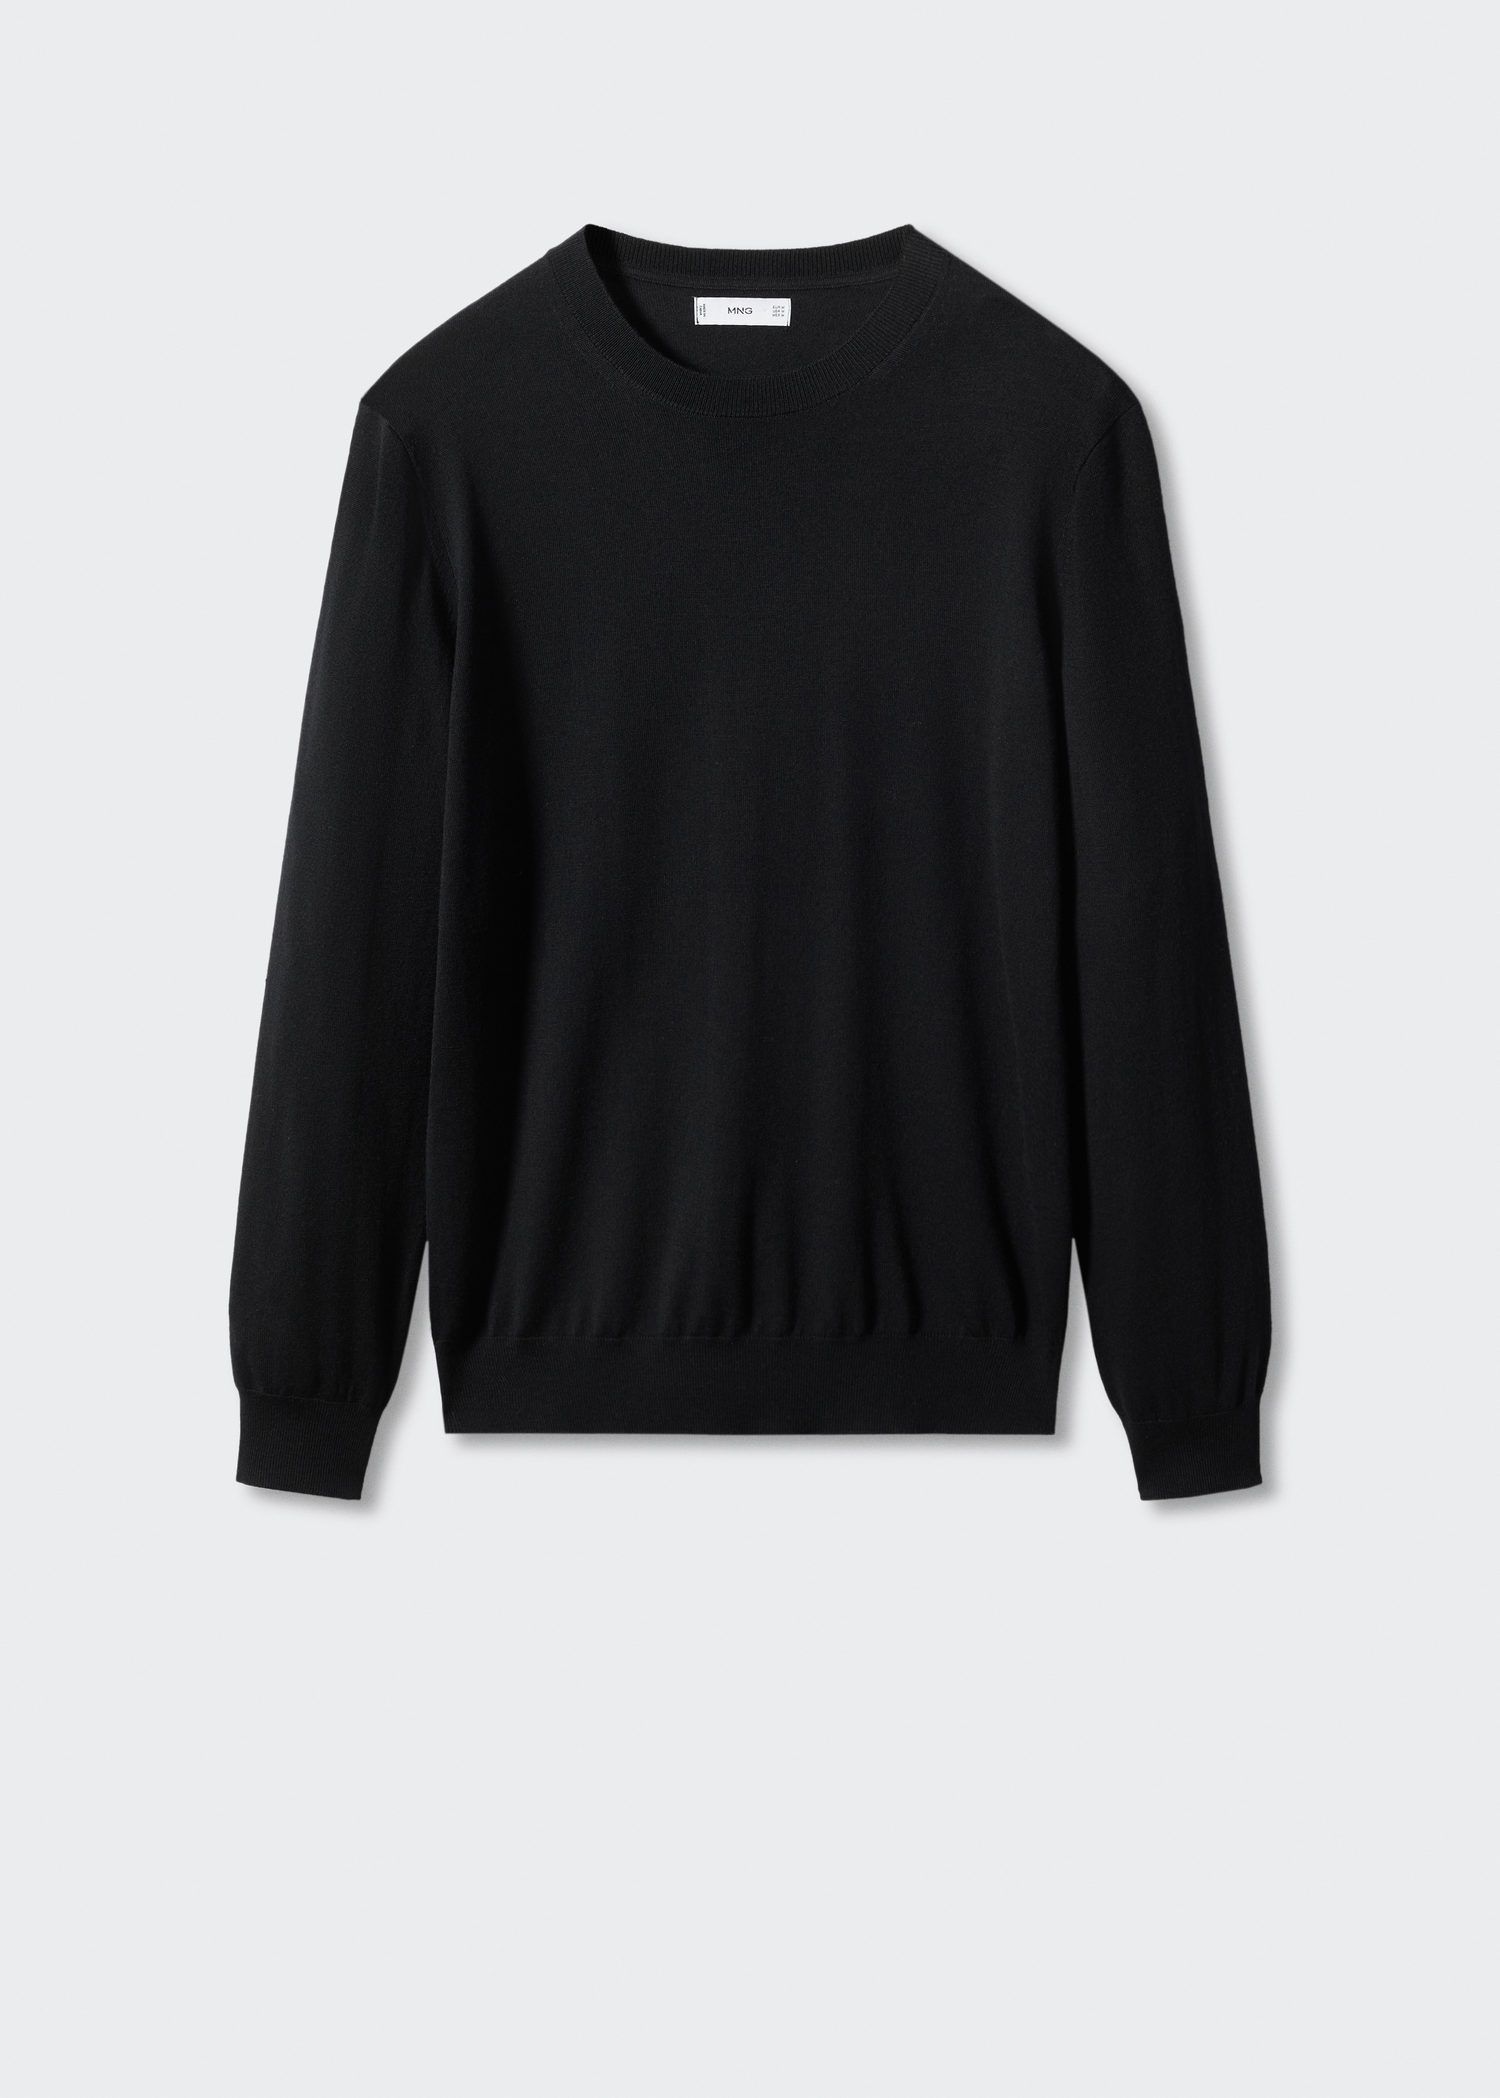 Mango Long Sleeve Sweater